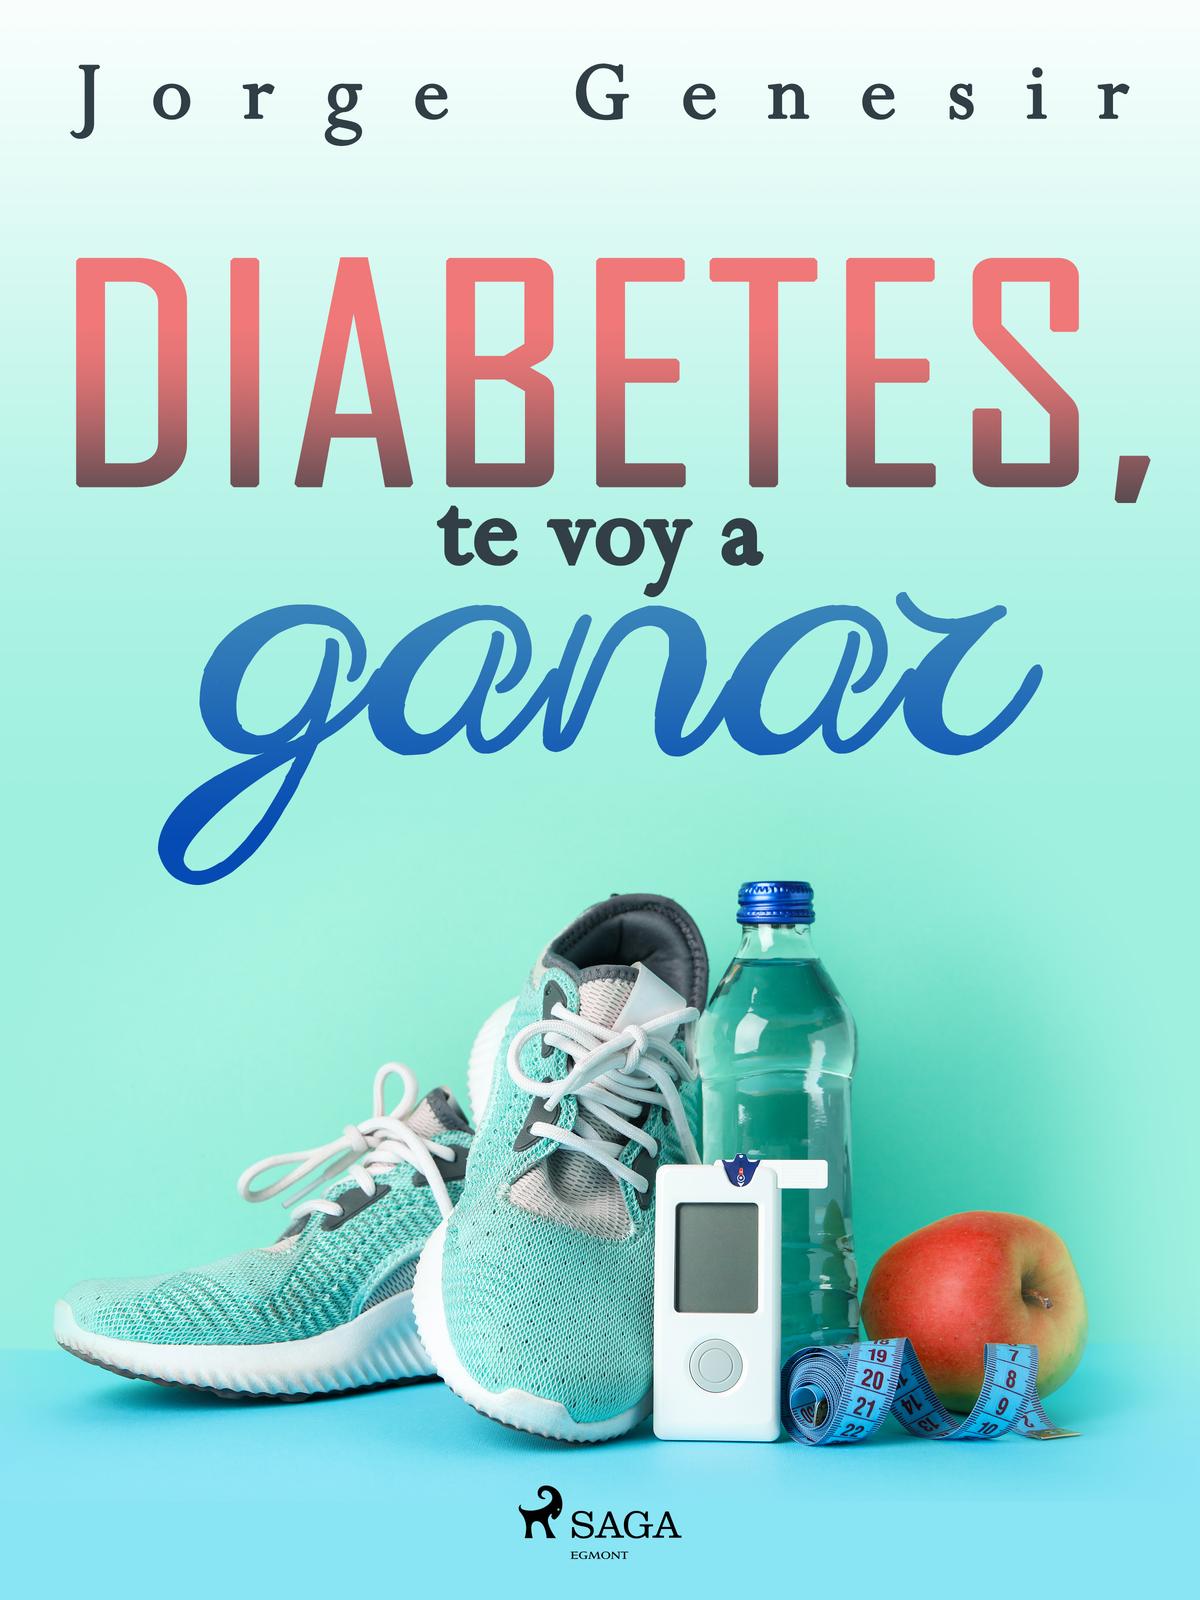 Diabetes te voy a ganar Copyright 2012 2022 Jorge Genesir and SAGA Egmont - photo 1